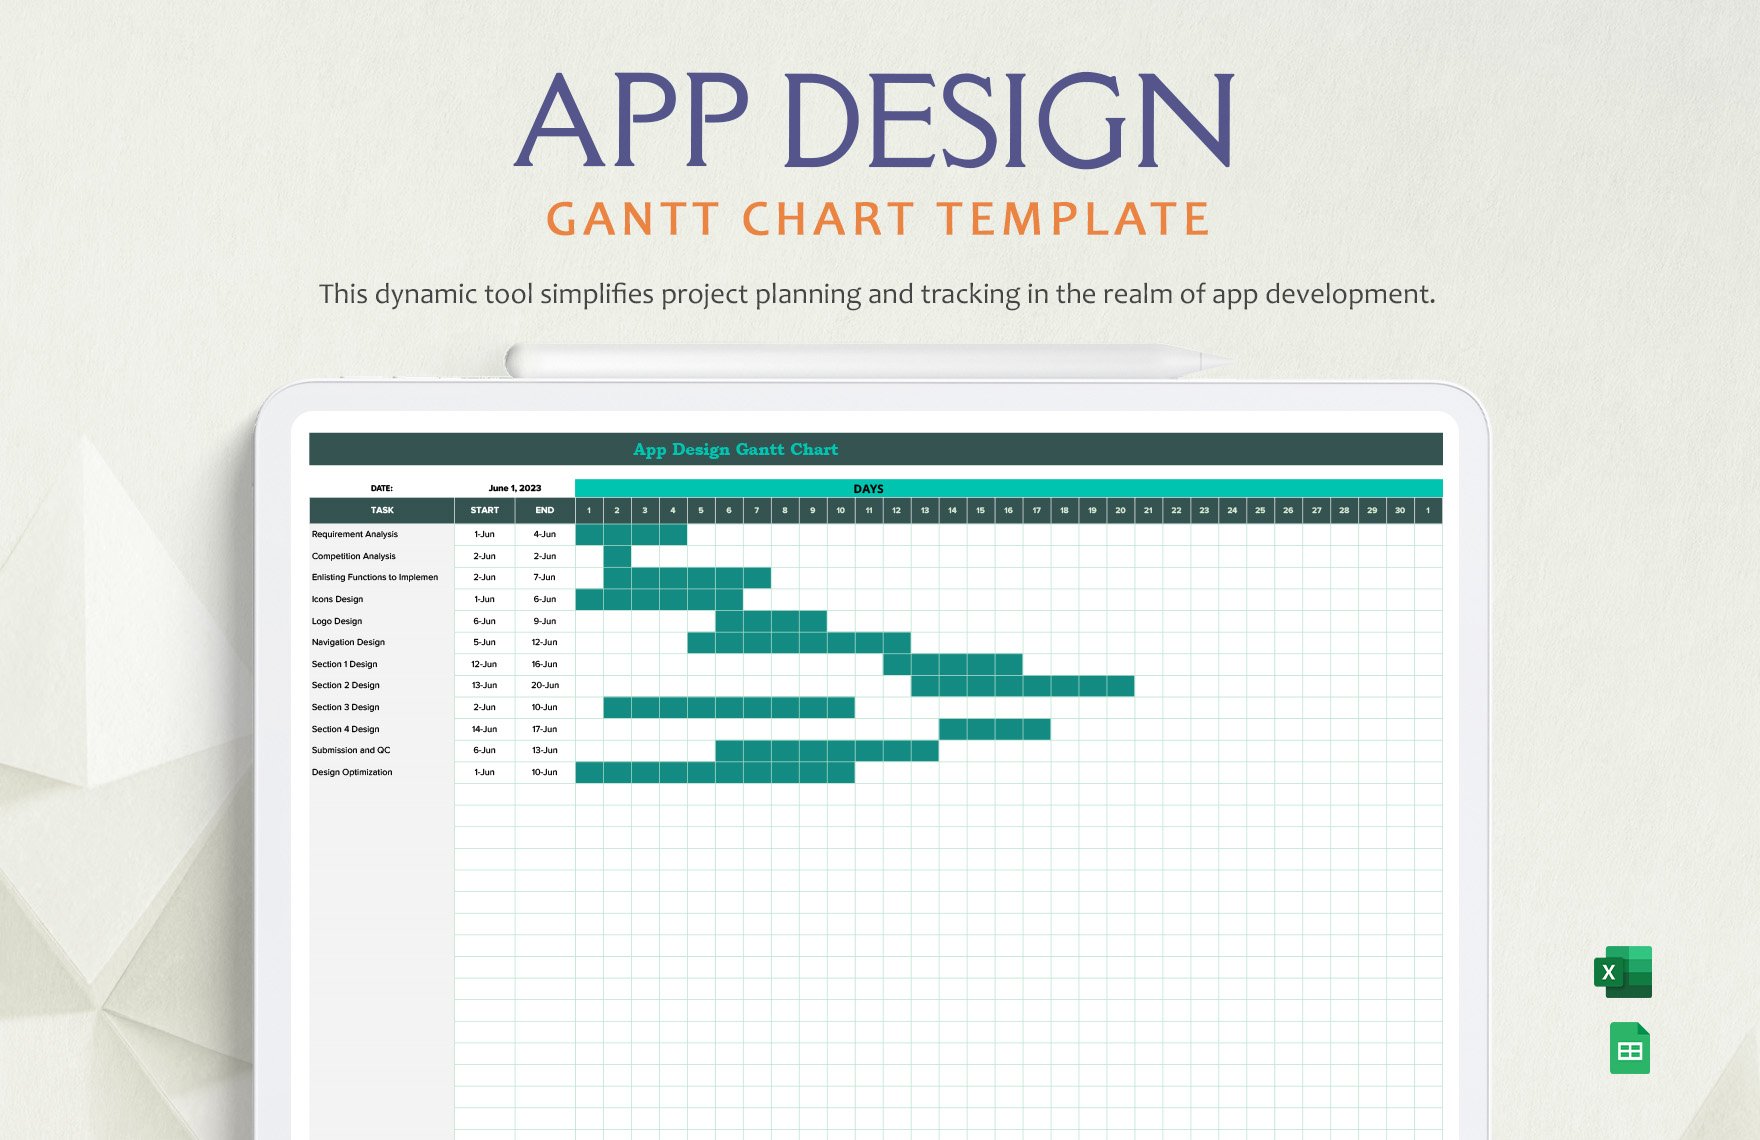 App Design Gantt Chart Template in Excel, Google Sheets